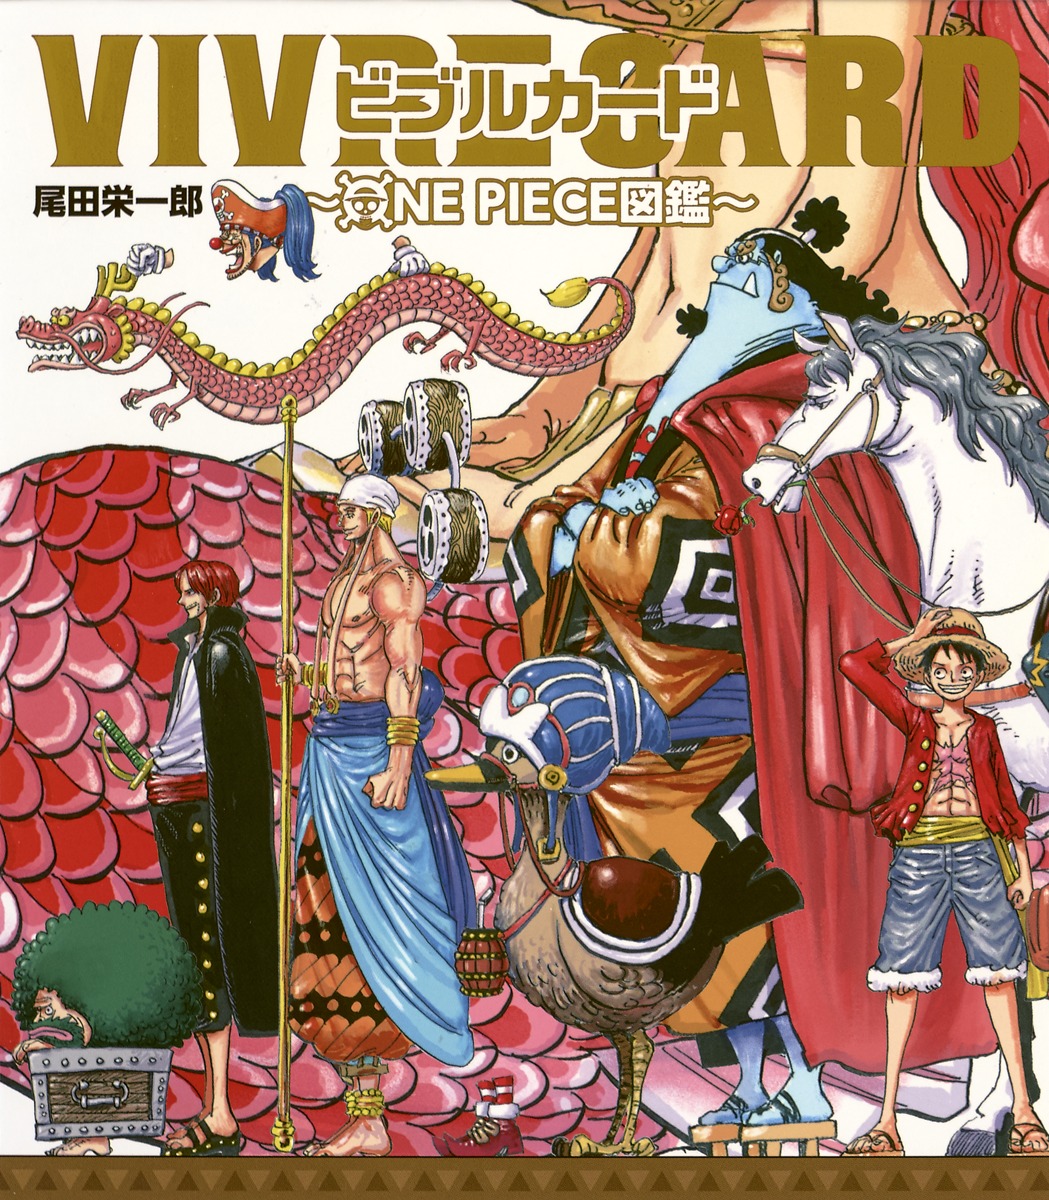 Vivre Card One Piece図鑑 Starter Set Vol 1 尾田 栄一郎 集英社の本 公式